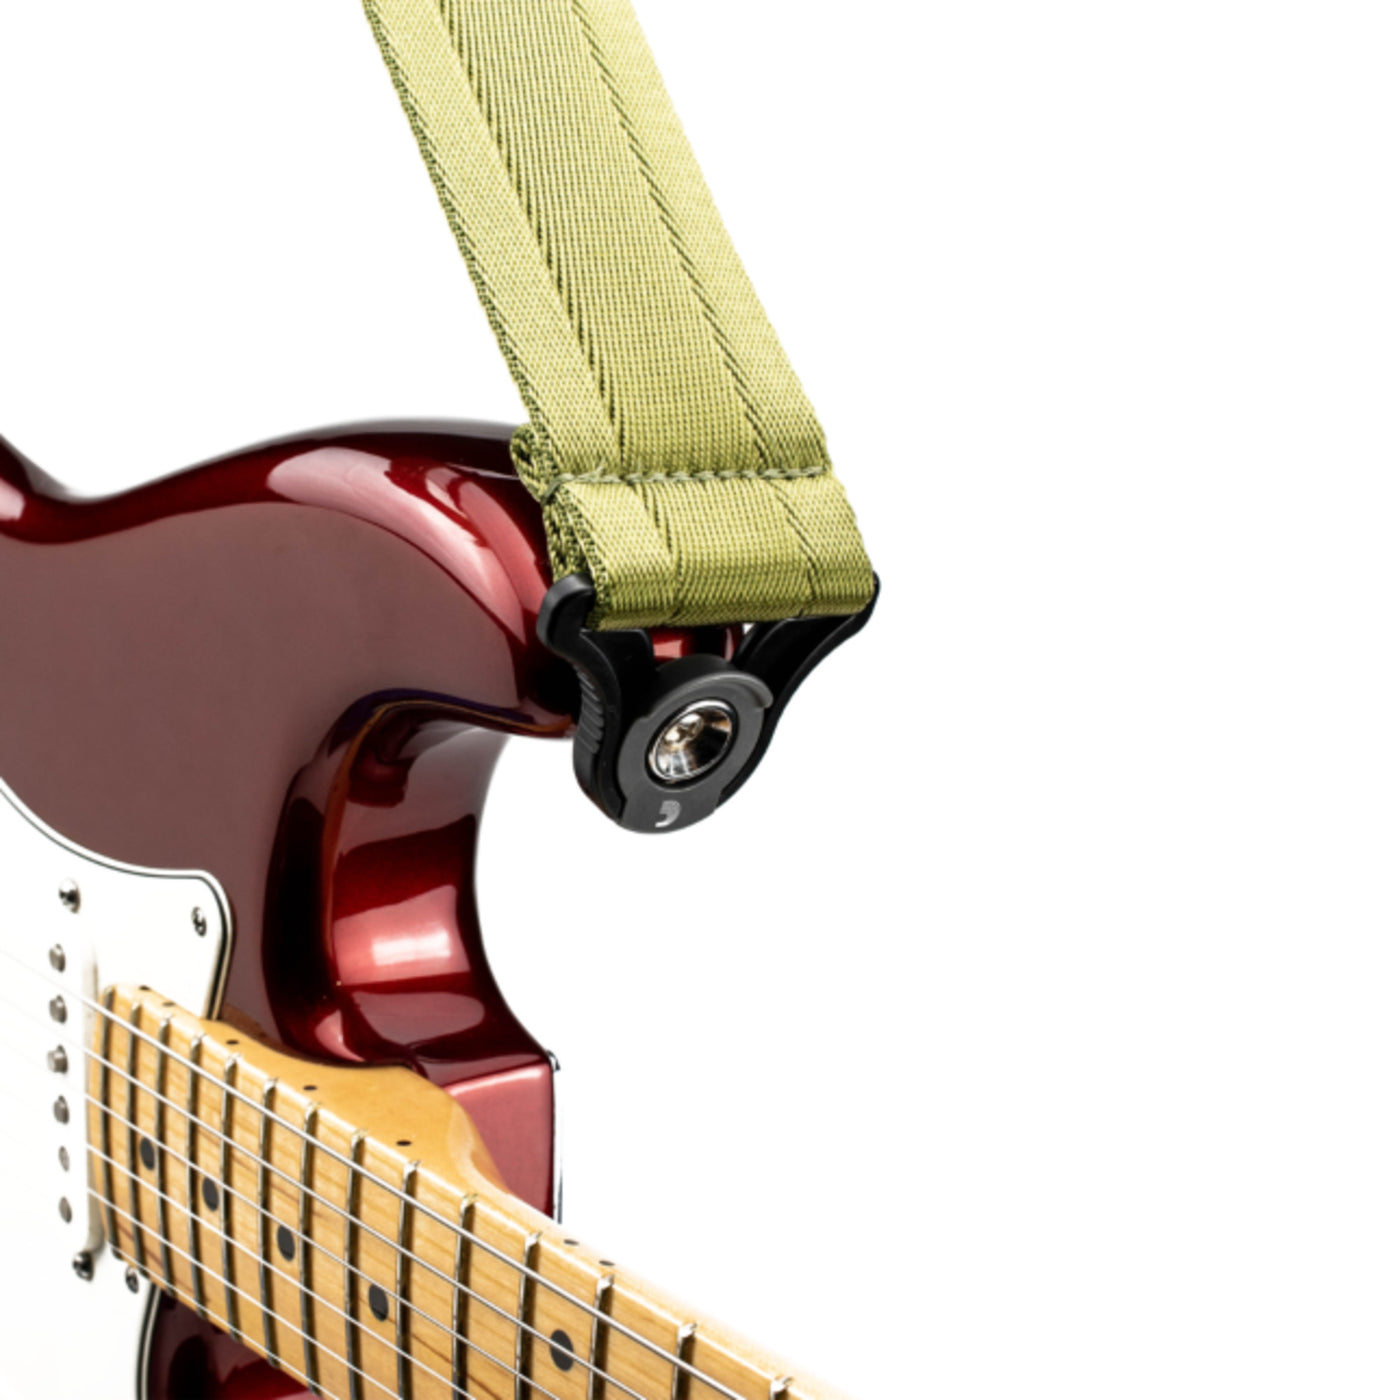 D'Addario Auto Lock Locking Guitar Strap, Moss (50BAL08)